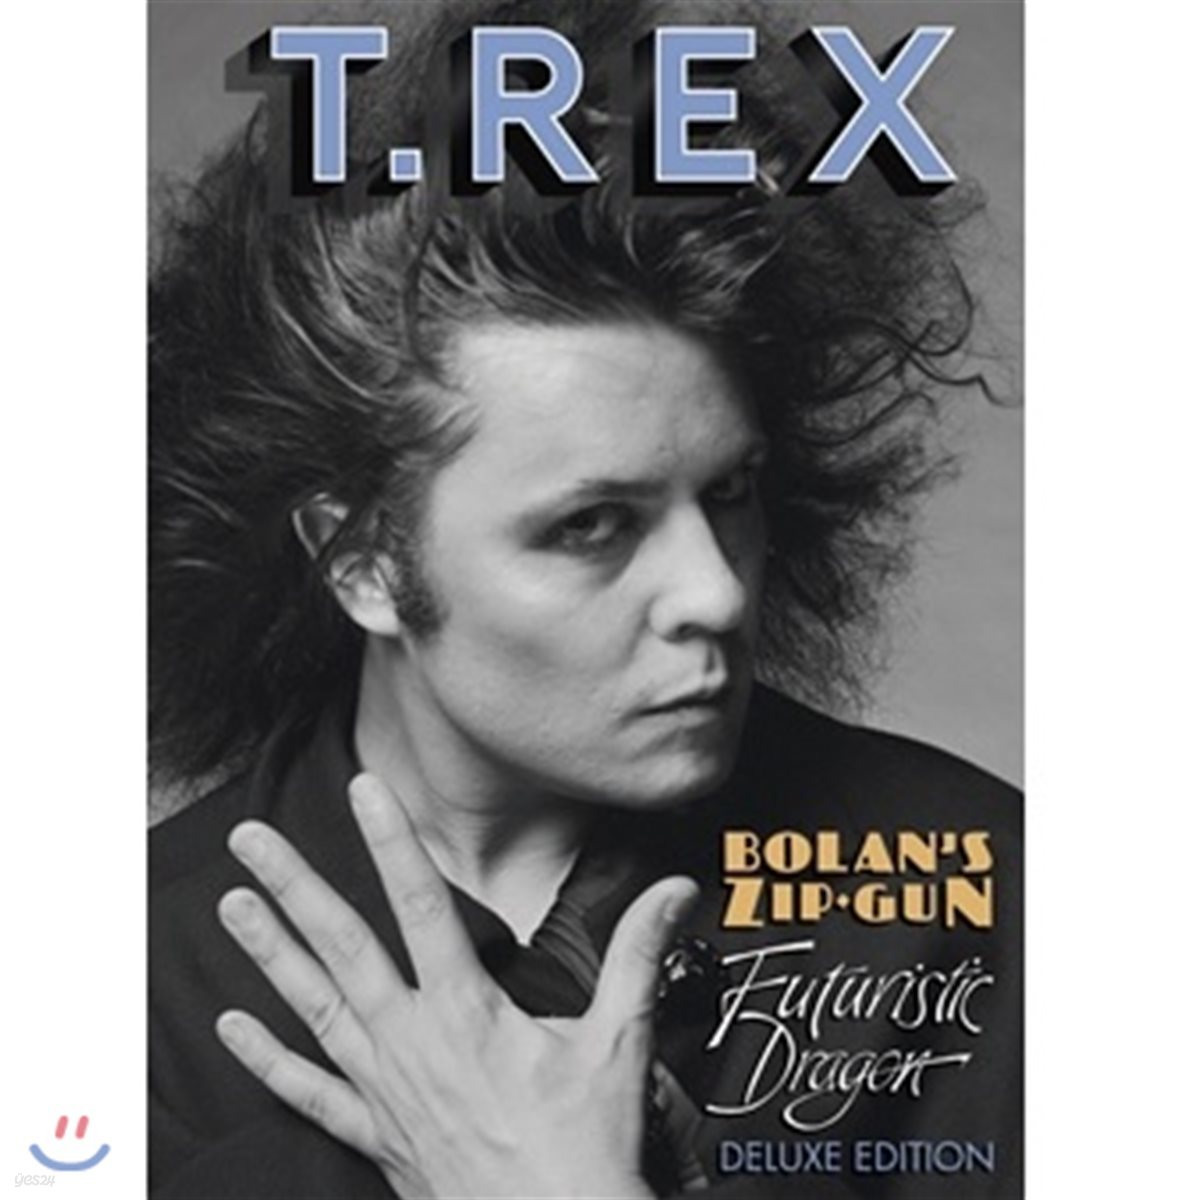 T.Rex (티렉스) - Bolan’s Zip Gun & Futuristic Dragon (Deluxe Edition)